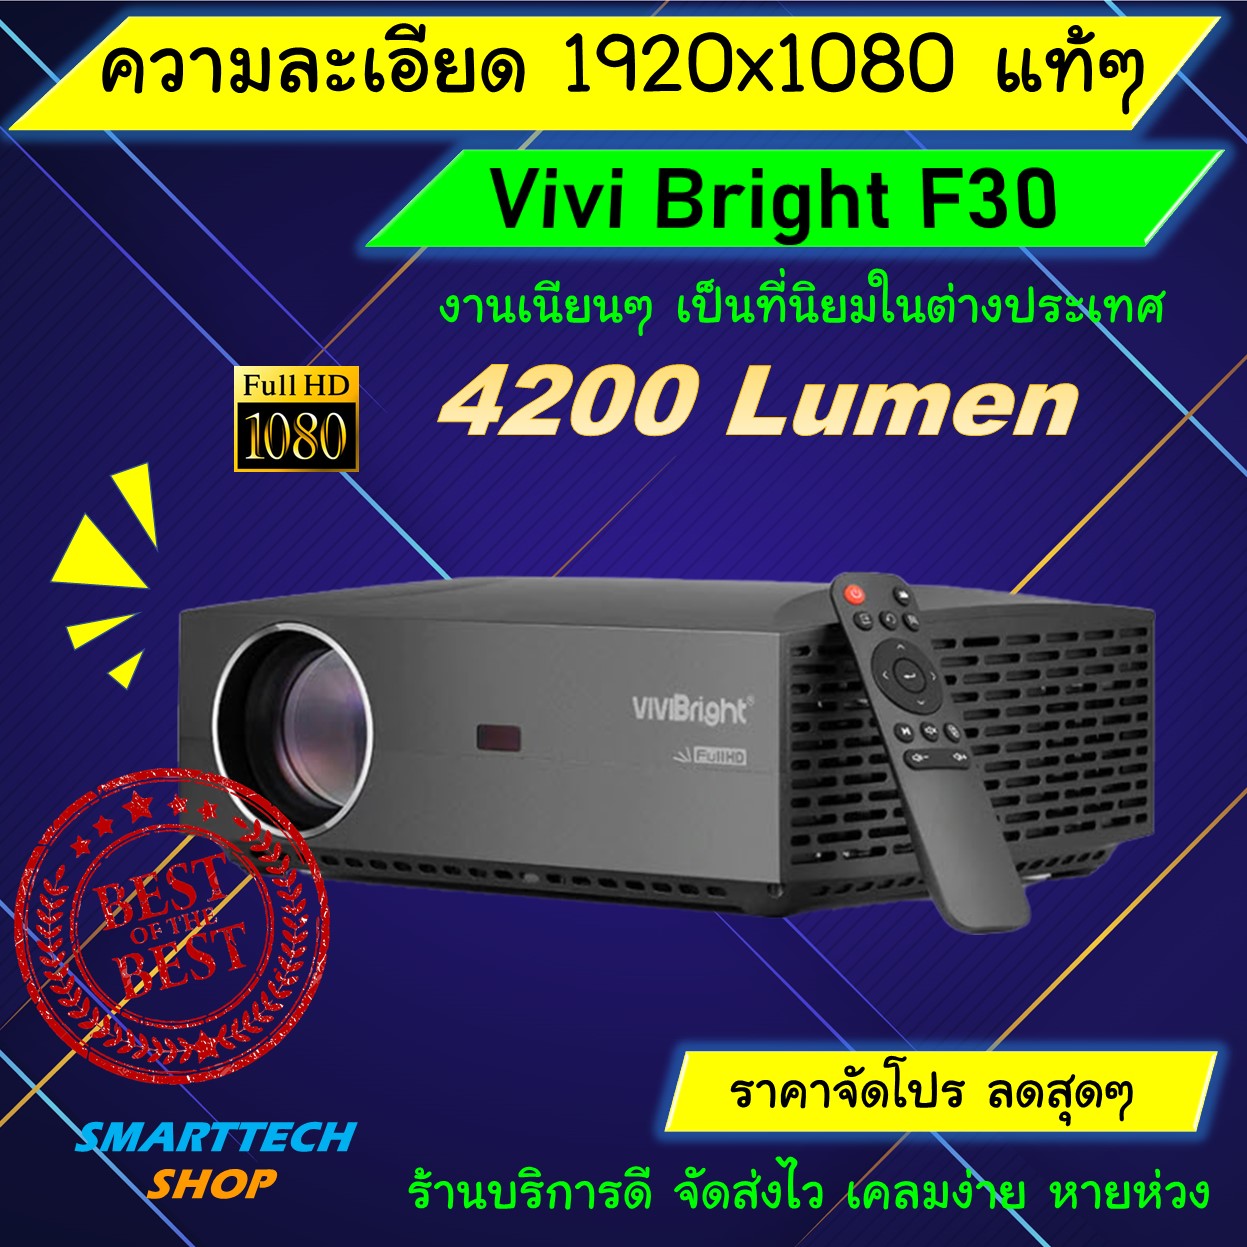 Mini Projector รุ่น Vivi Bright F30 ความละเอียดจริง Full HD 1080P  4200 Lumen ภาพสว่างชัด สีสดใส รุ่นใหม่ล่าสุด 2020 Smarttech Shop